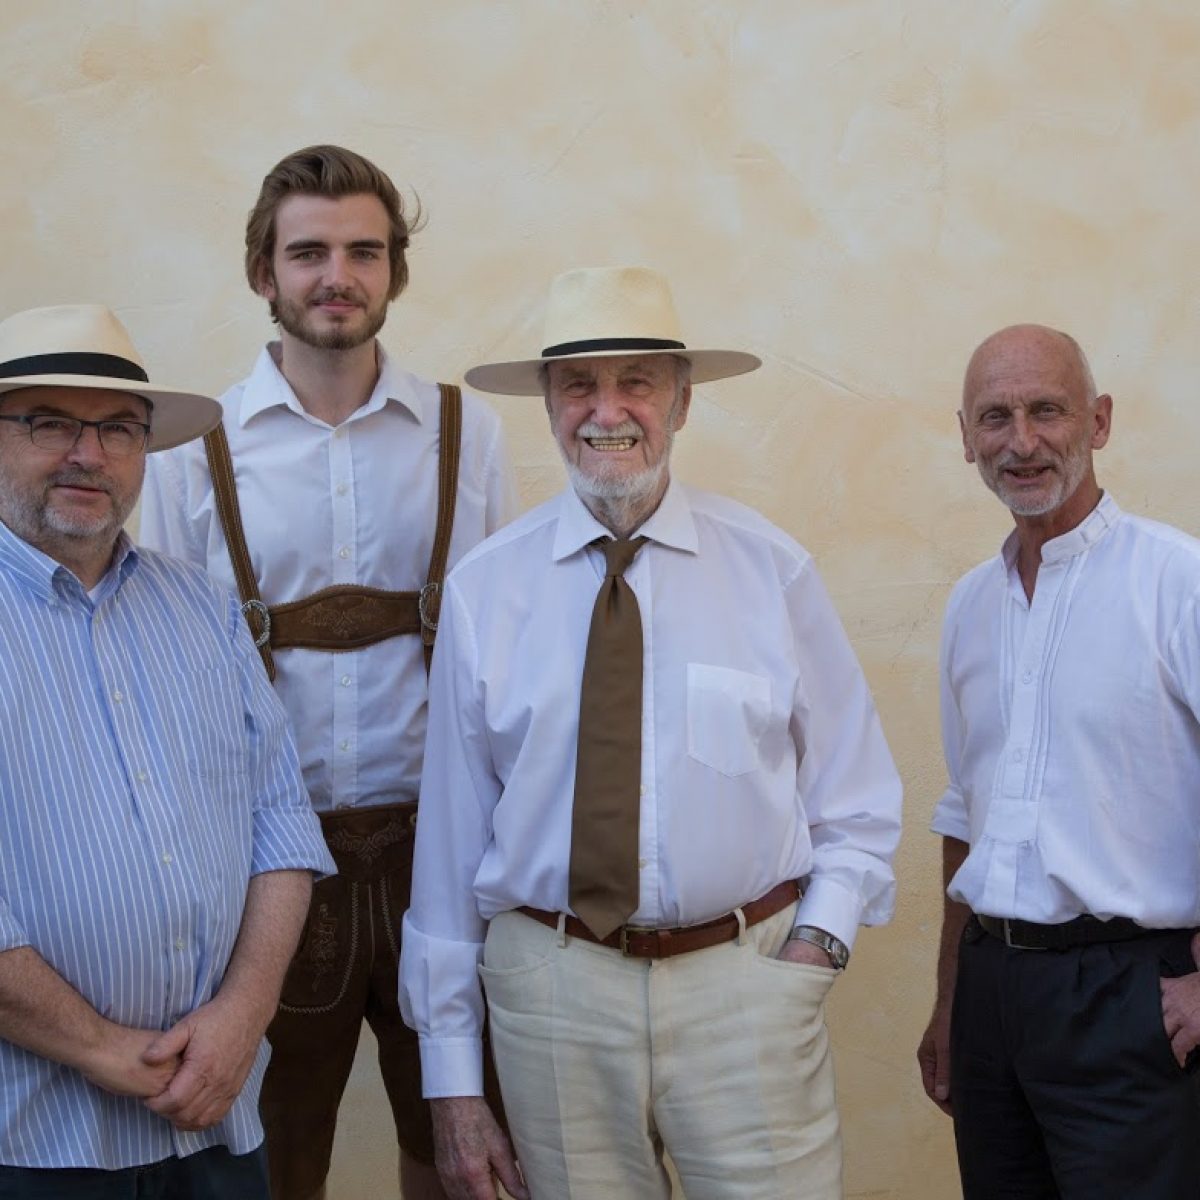 TUM Alumni Konstantin Lackner, Robert Schreiter, Josef Rampl and Michael Rieder celebrate the head of the family's 100th birthday.